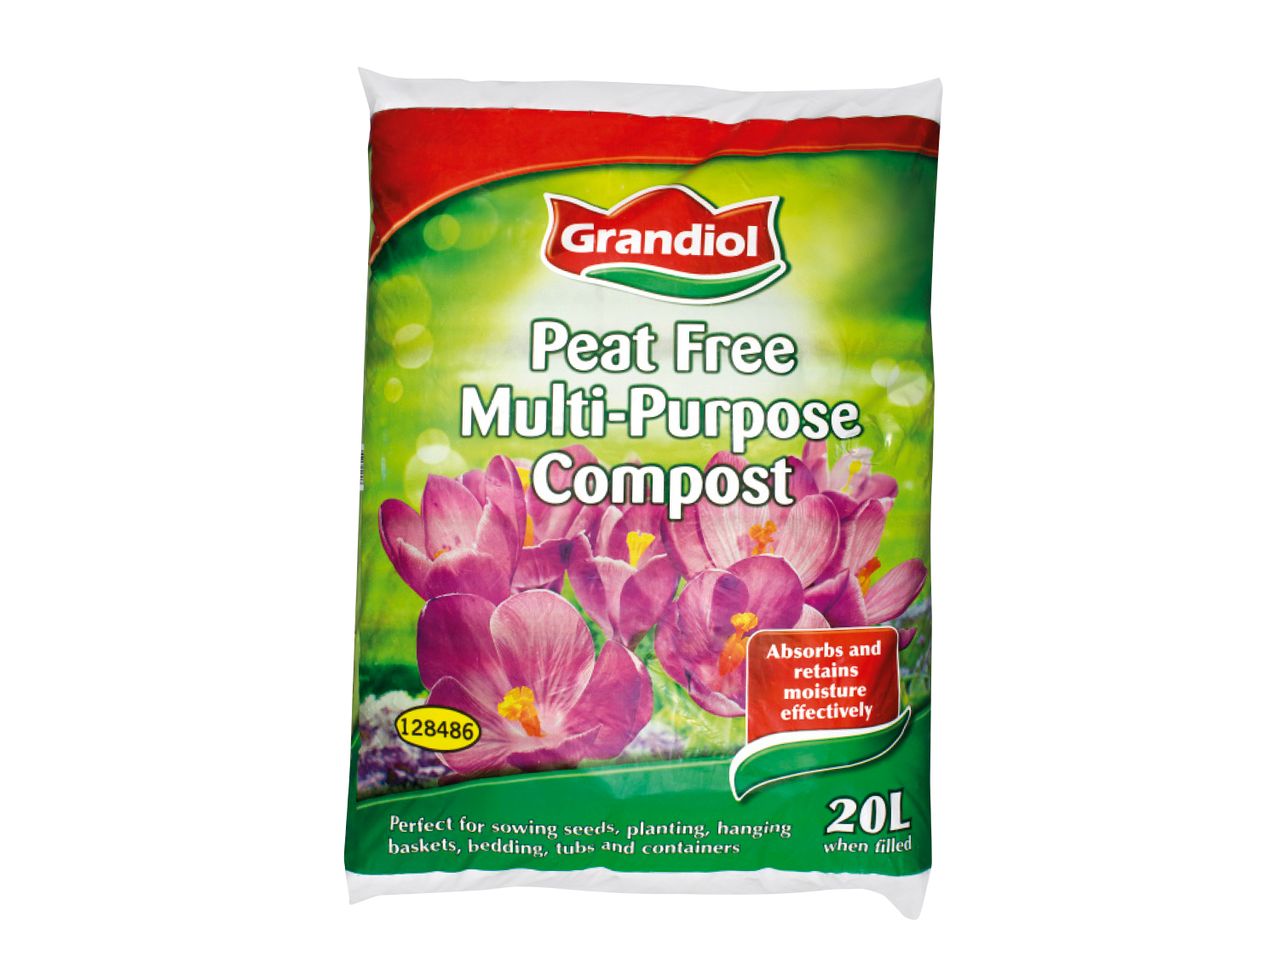 Go to full screen view: Grandiol Multipurpose Compost 20L - Image 1